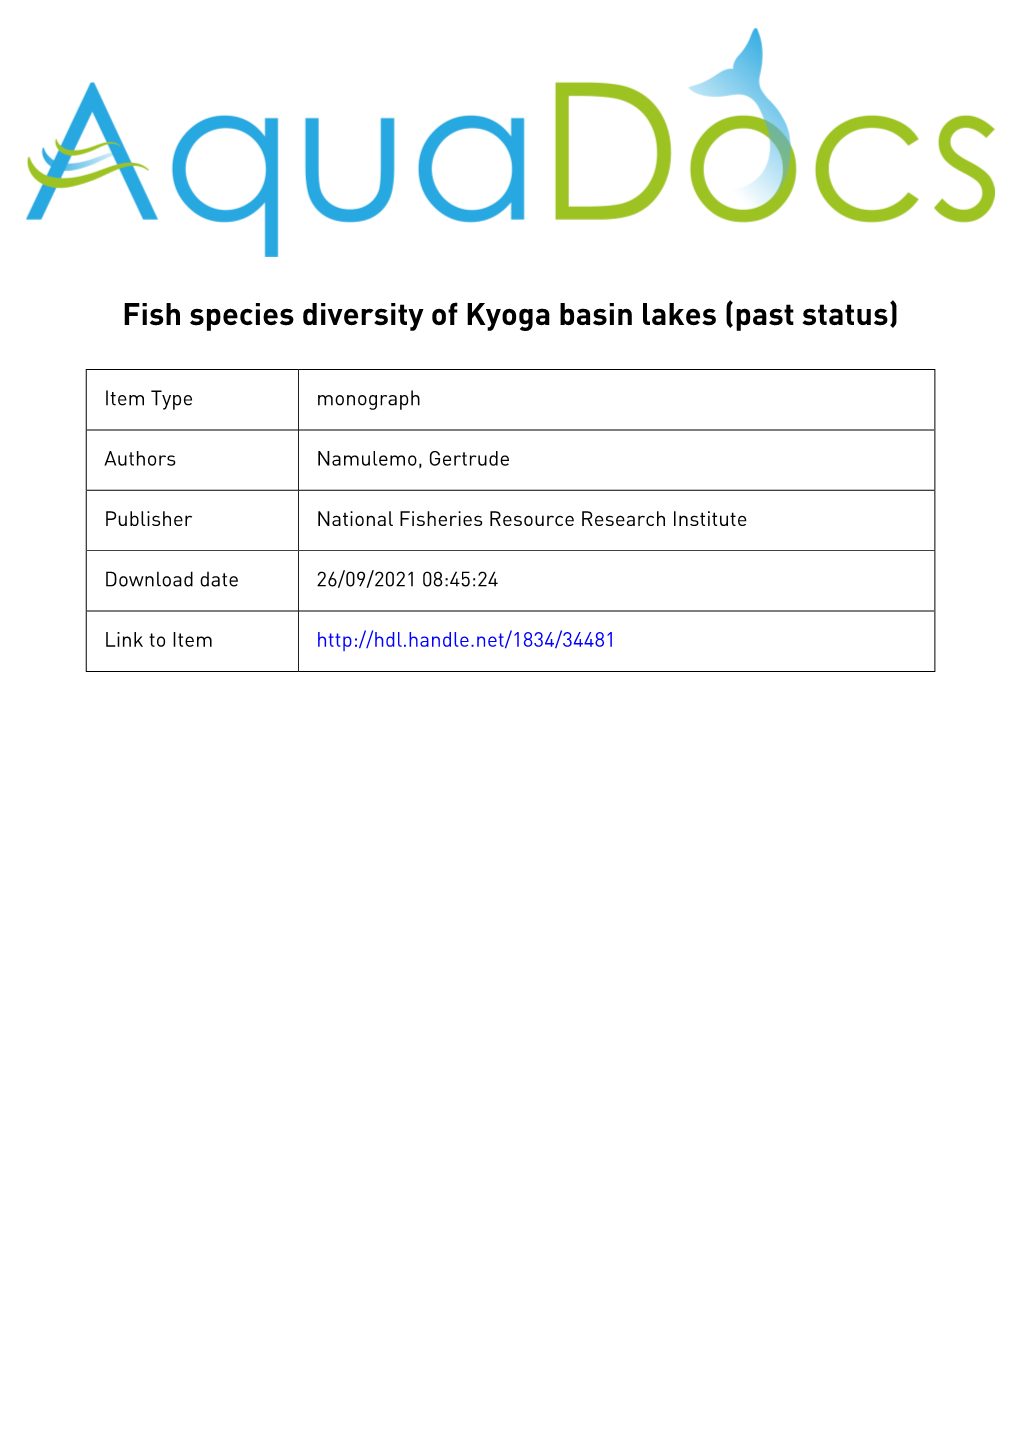 Fish Species Diversity of Kyoga Basin Lakes (Past Status)